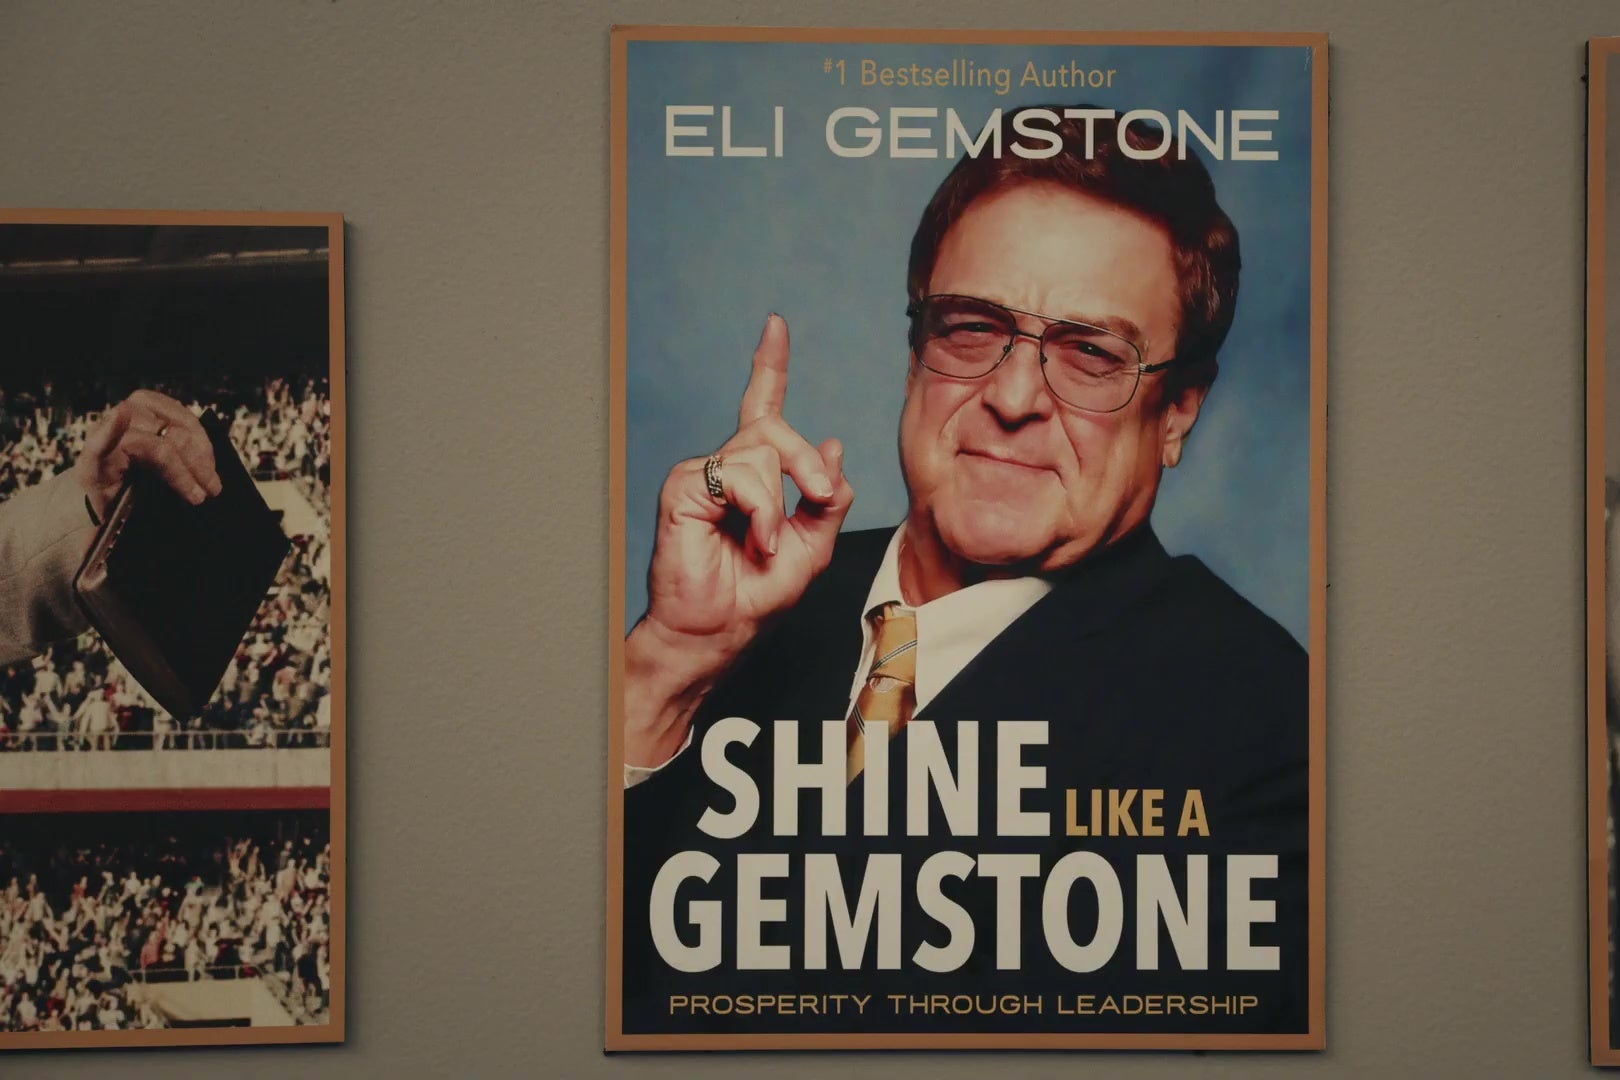 The cover of a book by Eli Gemstone, entitled "Shine Like a Gemstone: Prosperity Through Leadership."